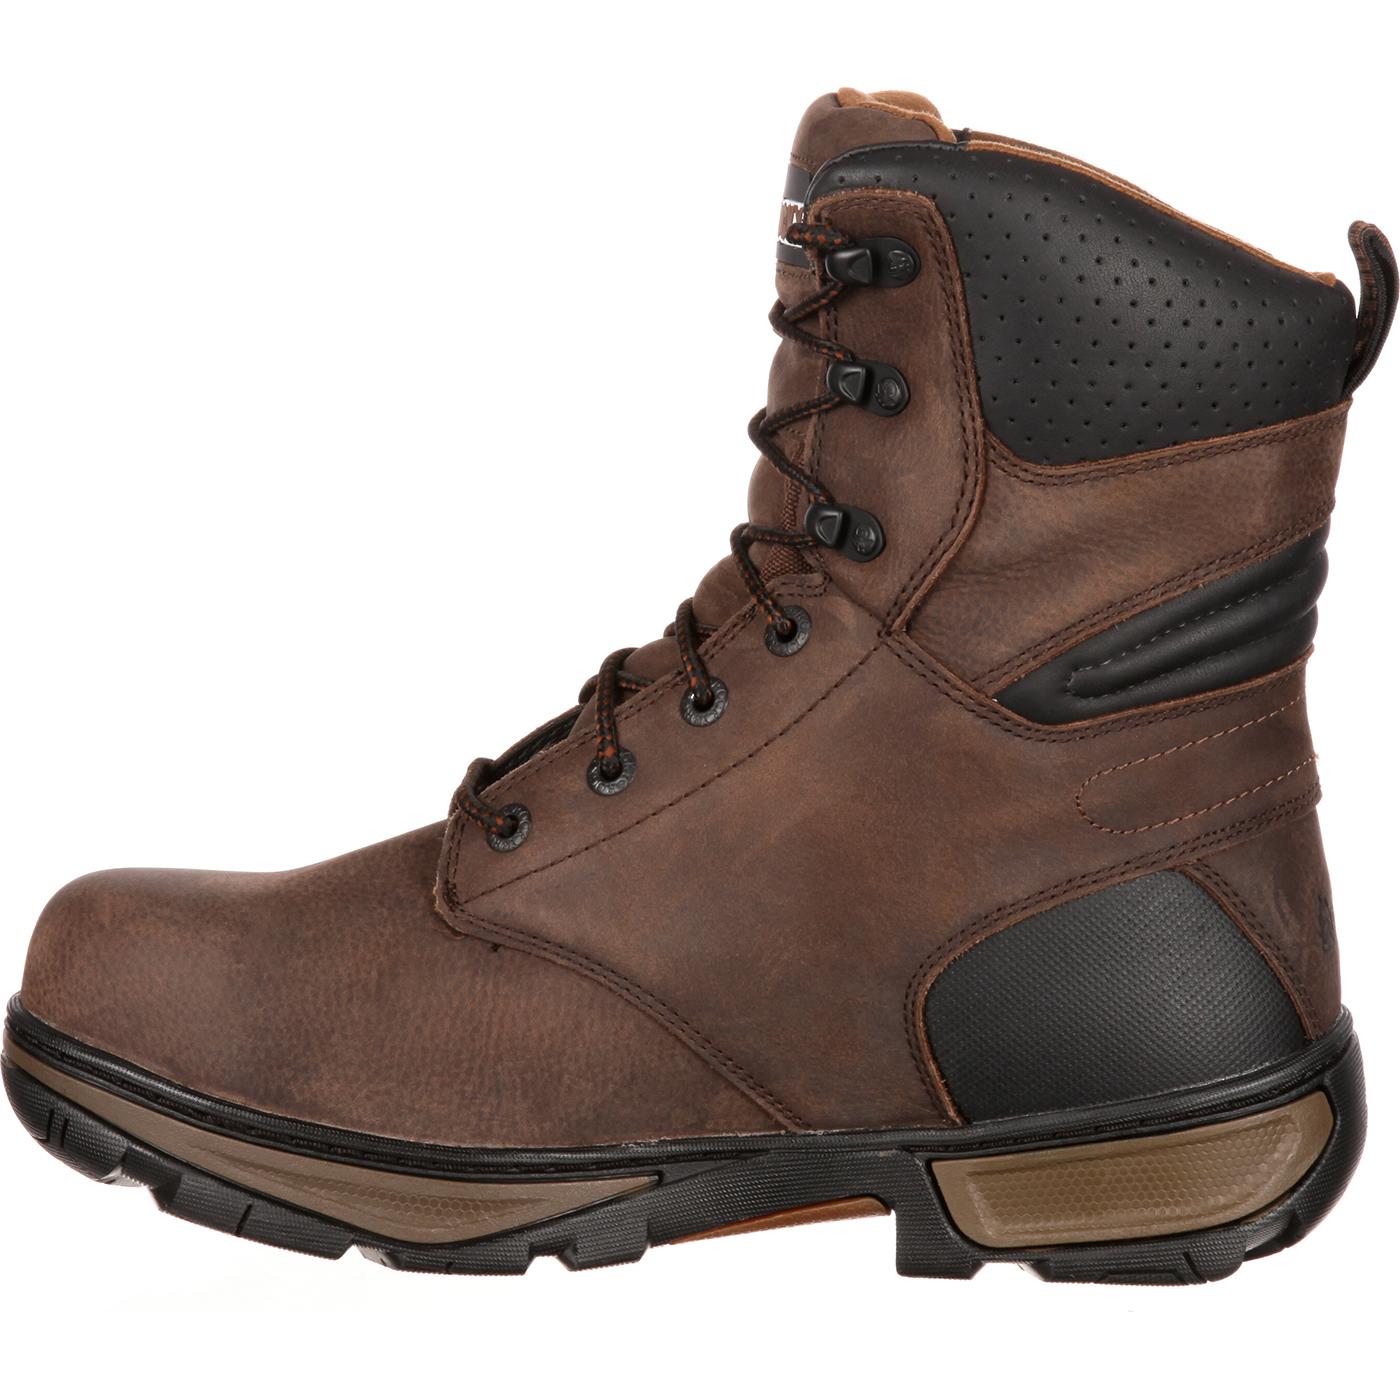 Rocky Forge Men's Brown Steel Toe Waterproof Work Boots